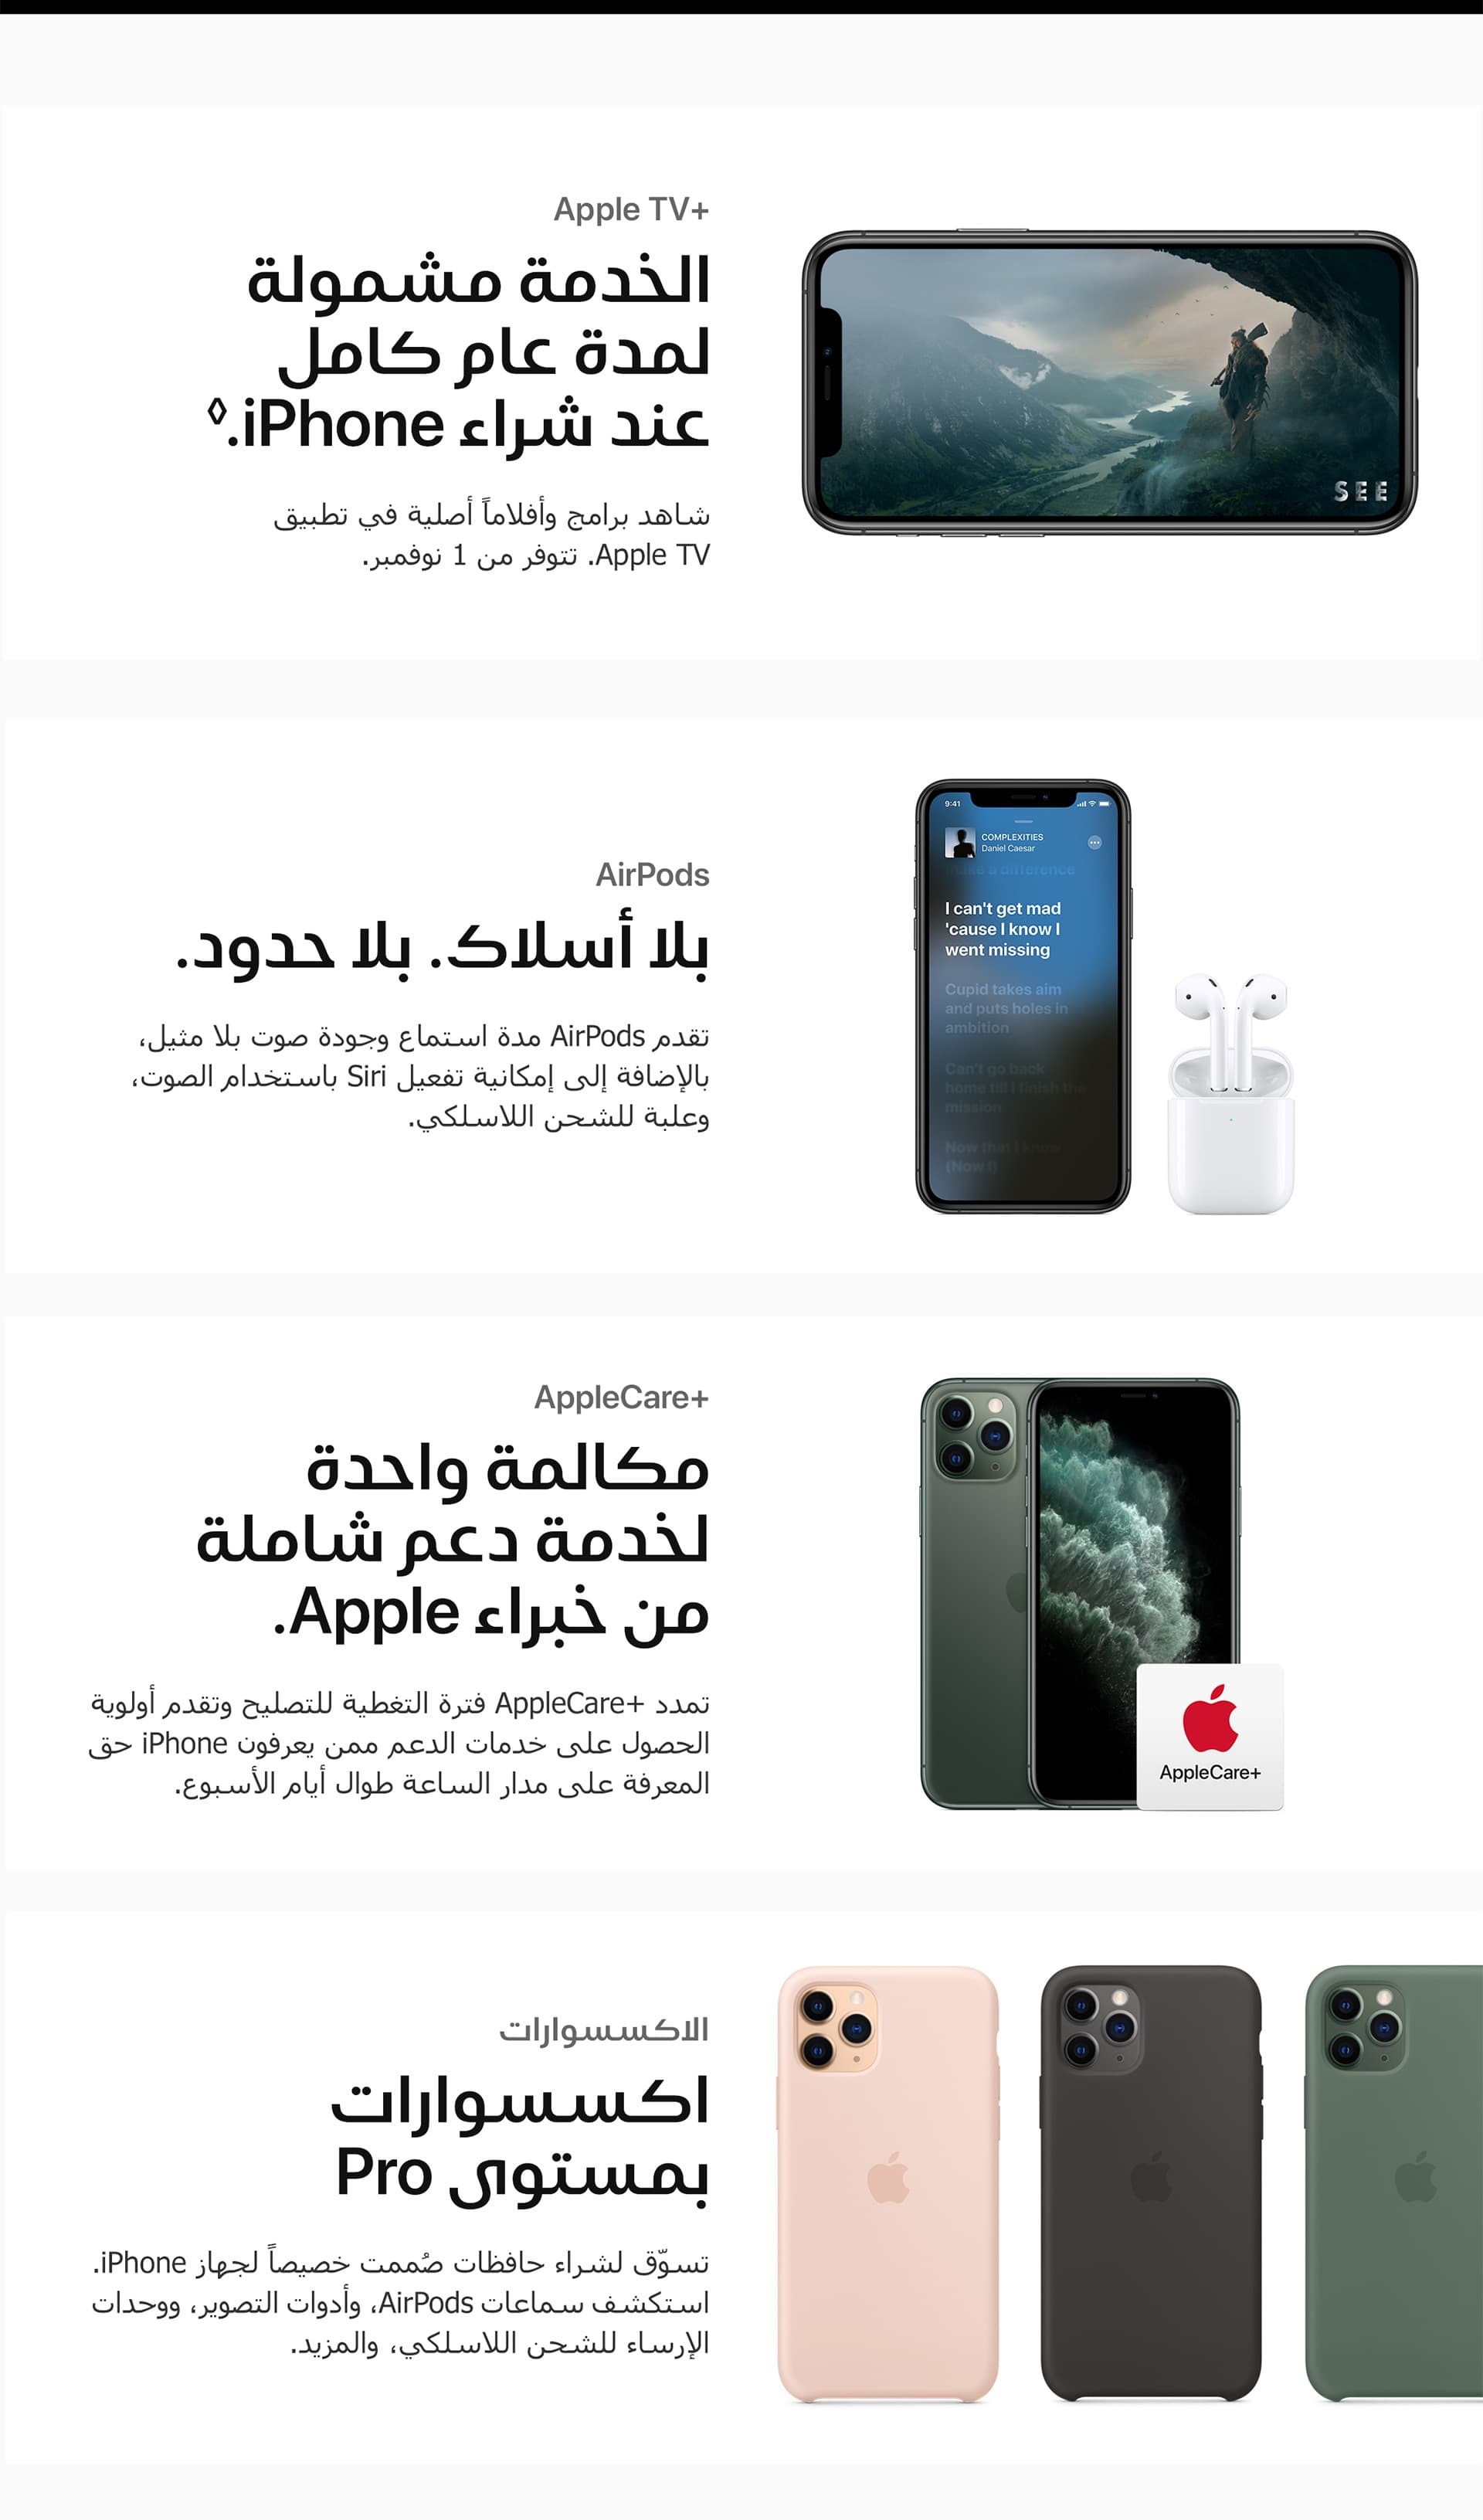 apple-iphone11-pro-max-price-etisalat-uae-overview-4-ar